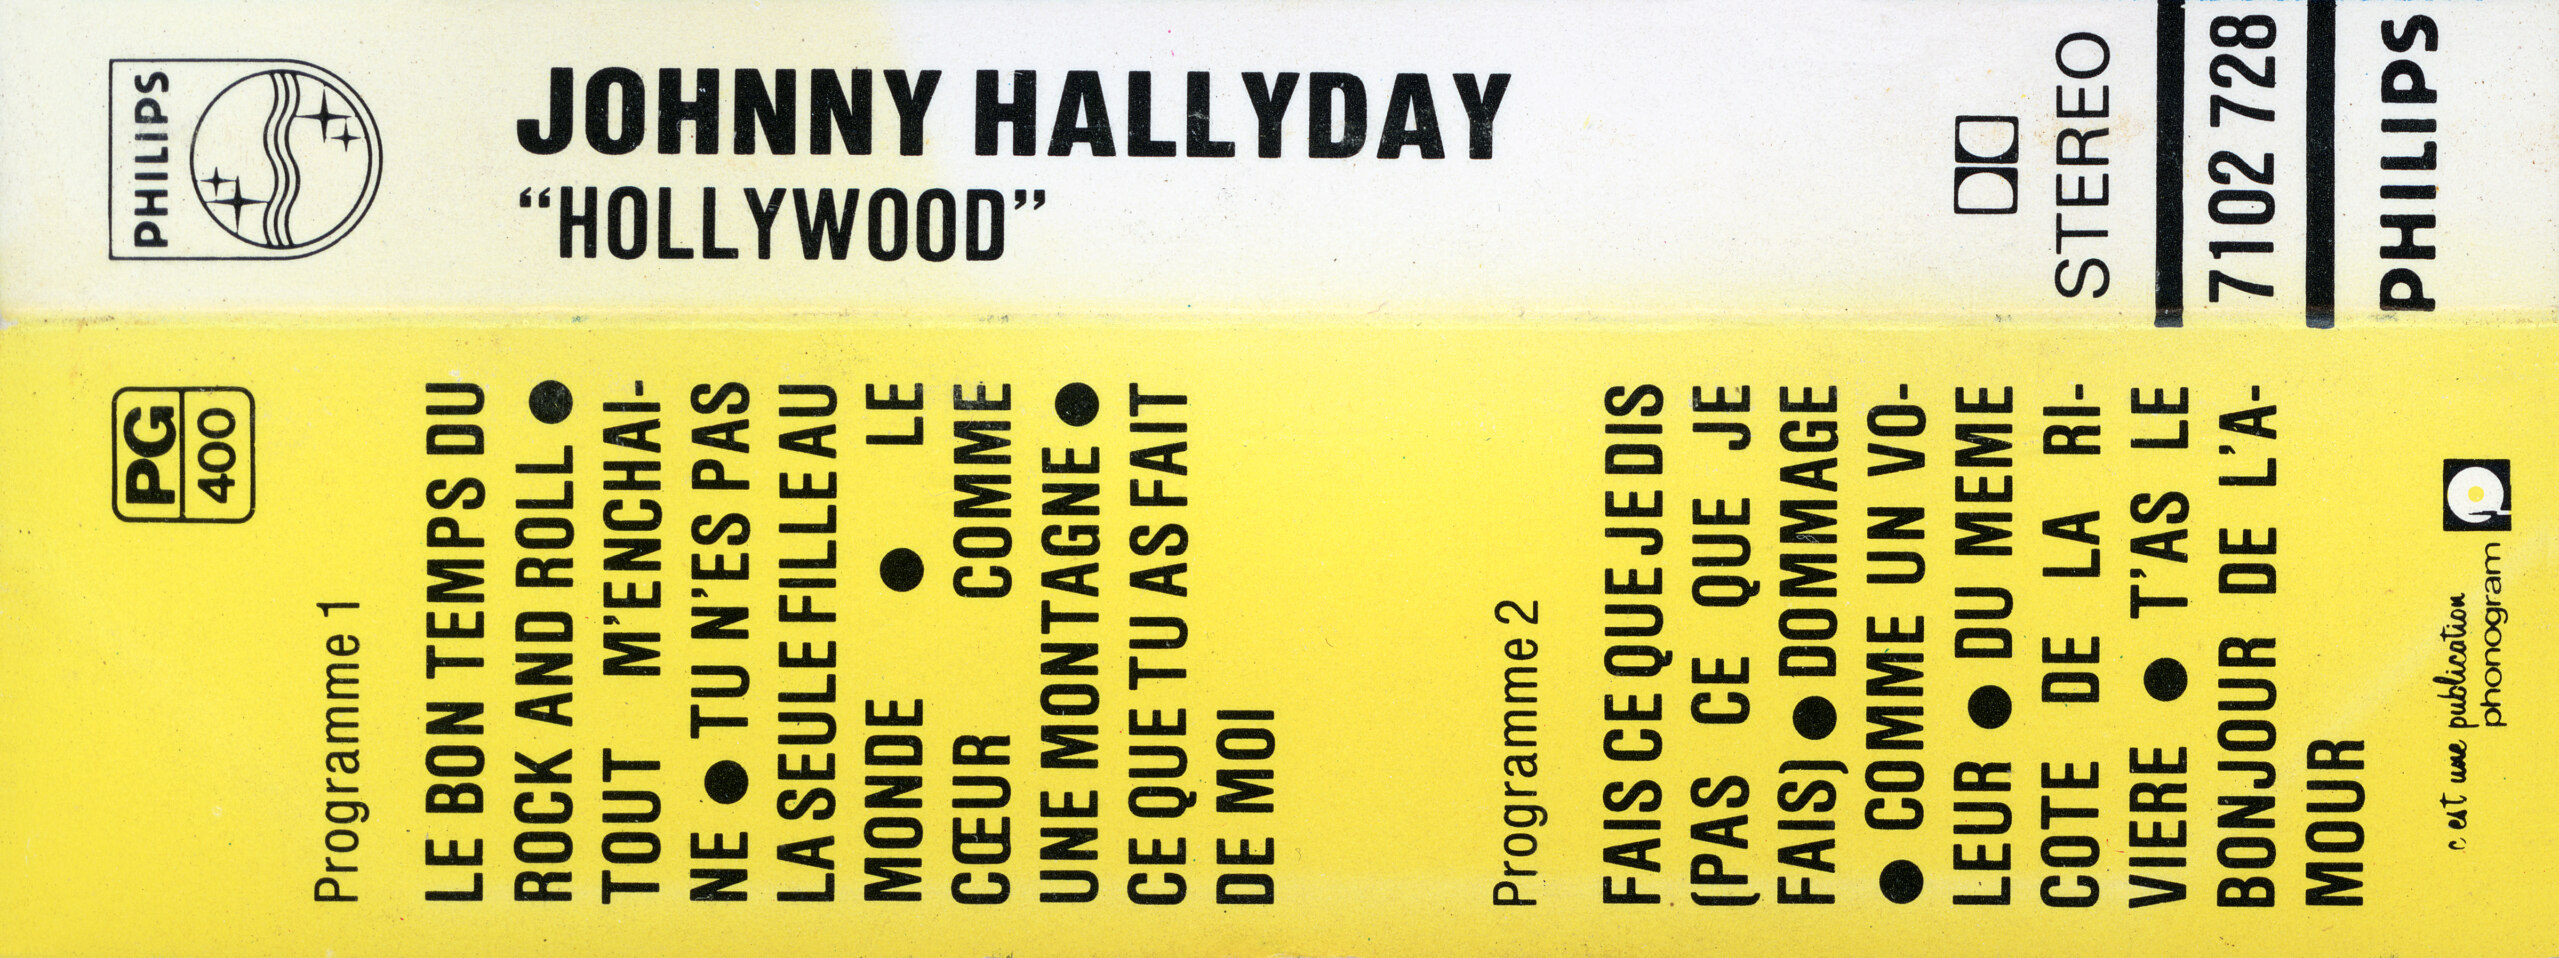 Cassette 25 Hollywood 1979-011